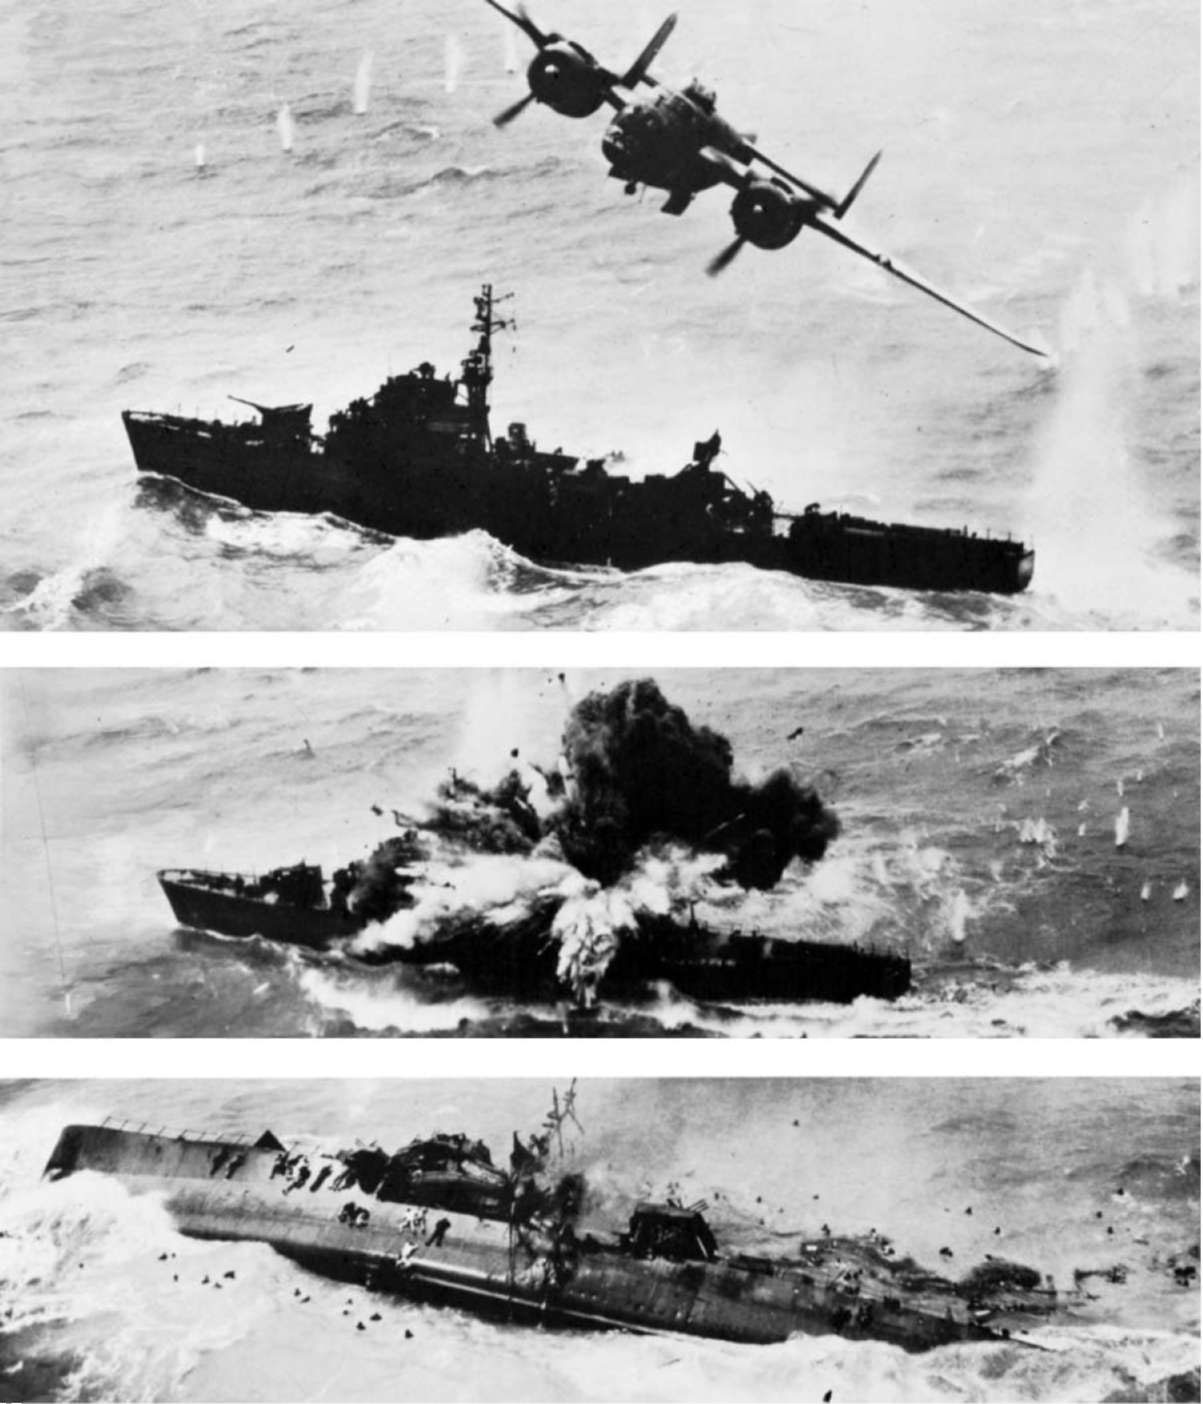 07 - USAAF B-25 sinks Japanese destroyer Amatsukaze off the coast of Xiamen China 6 April 1945